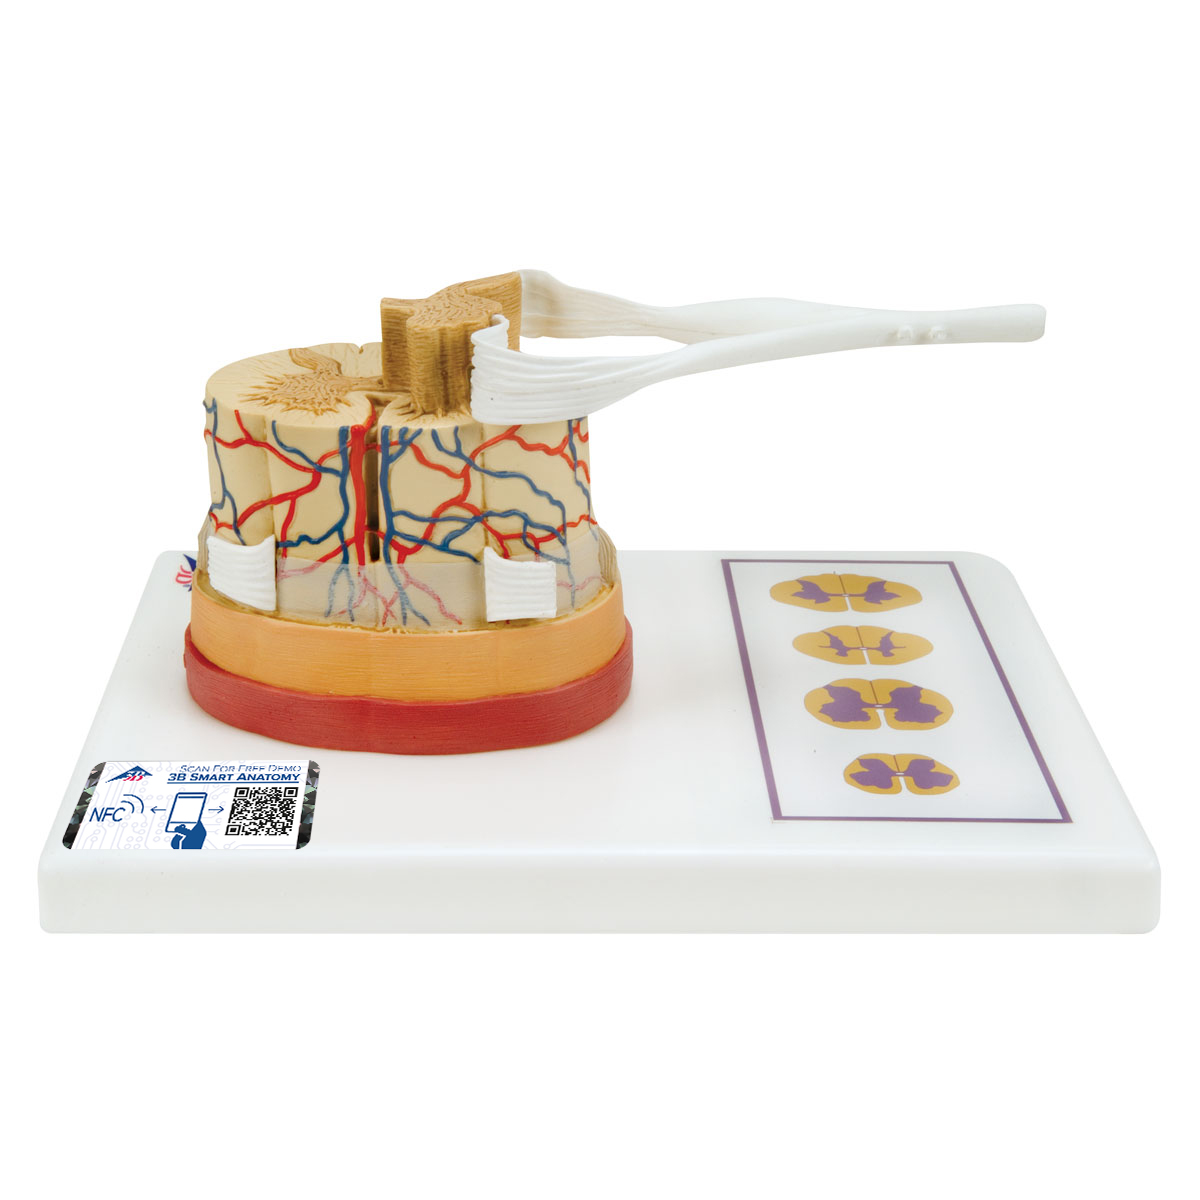 Model pentru studiul maduvei spinarii, material didactic biologie